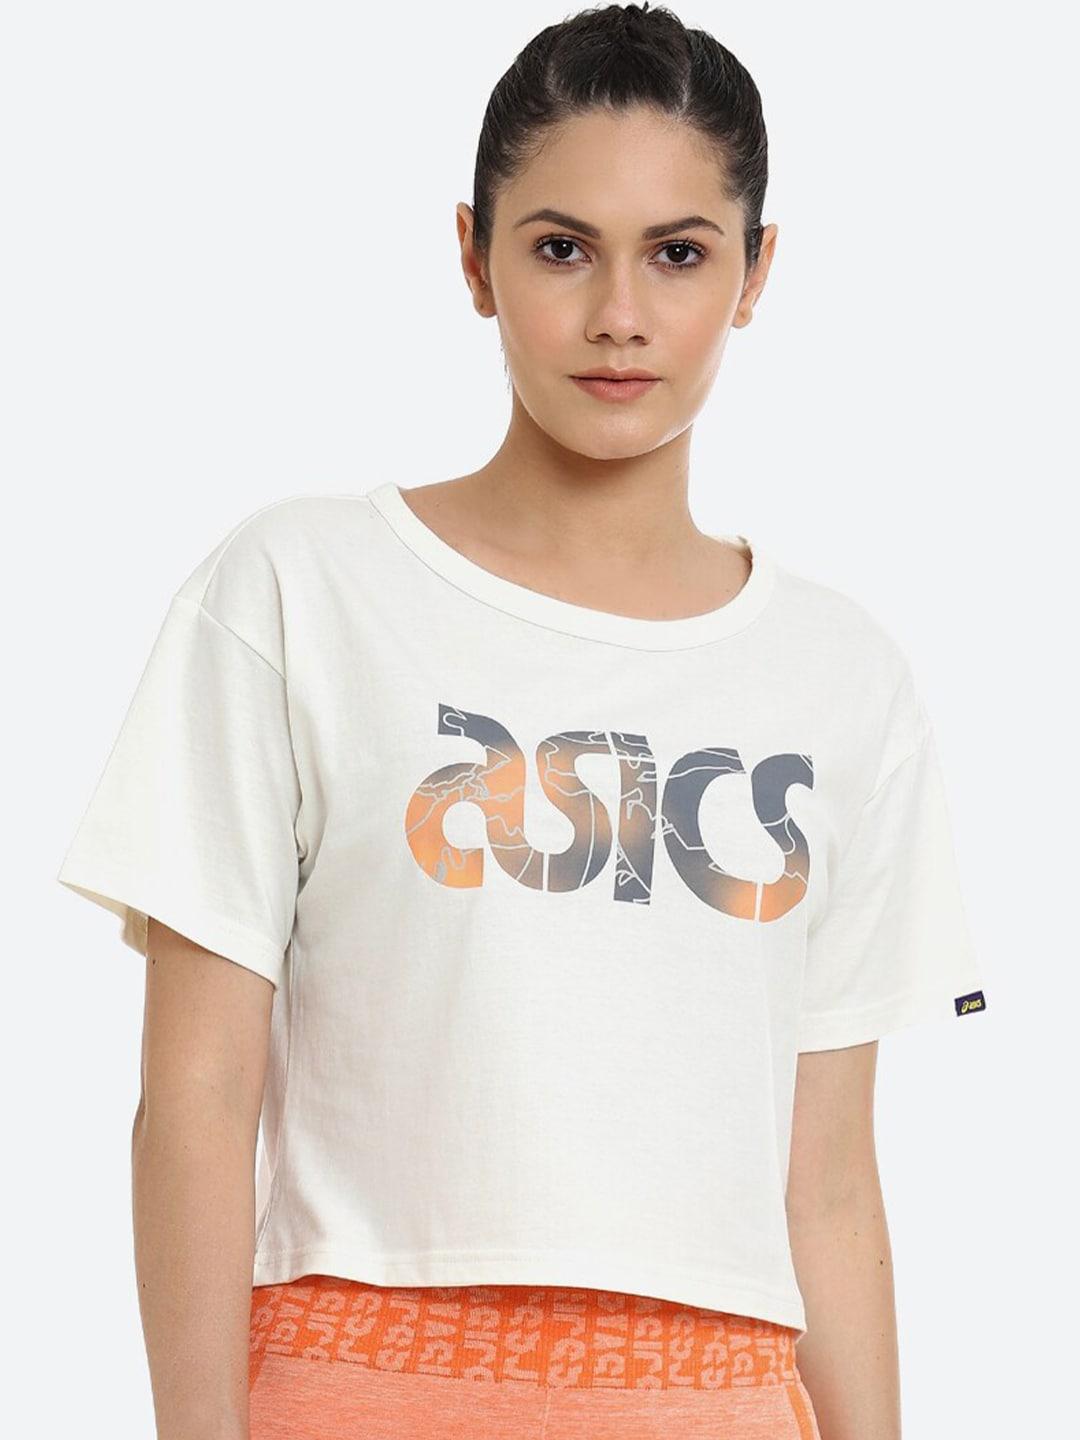 asics women jsy gpx cpd ss typography printed applique walking t-shirt